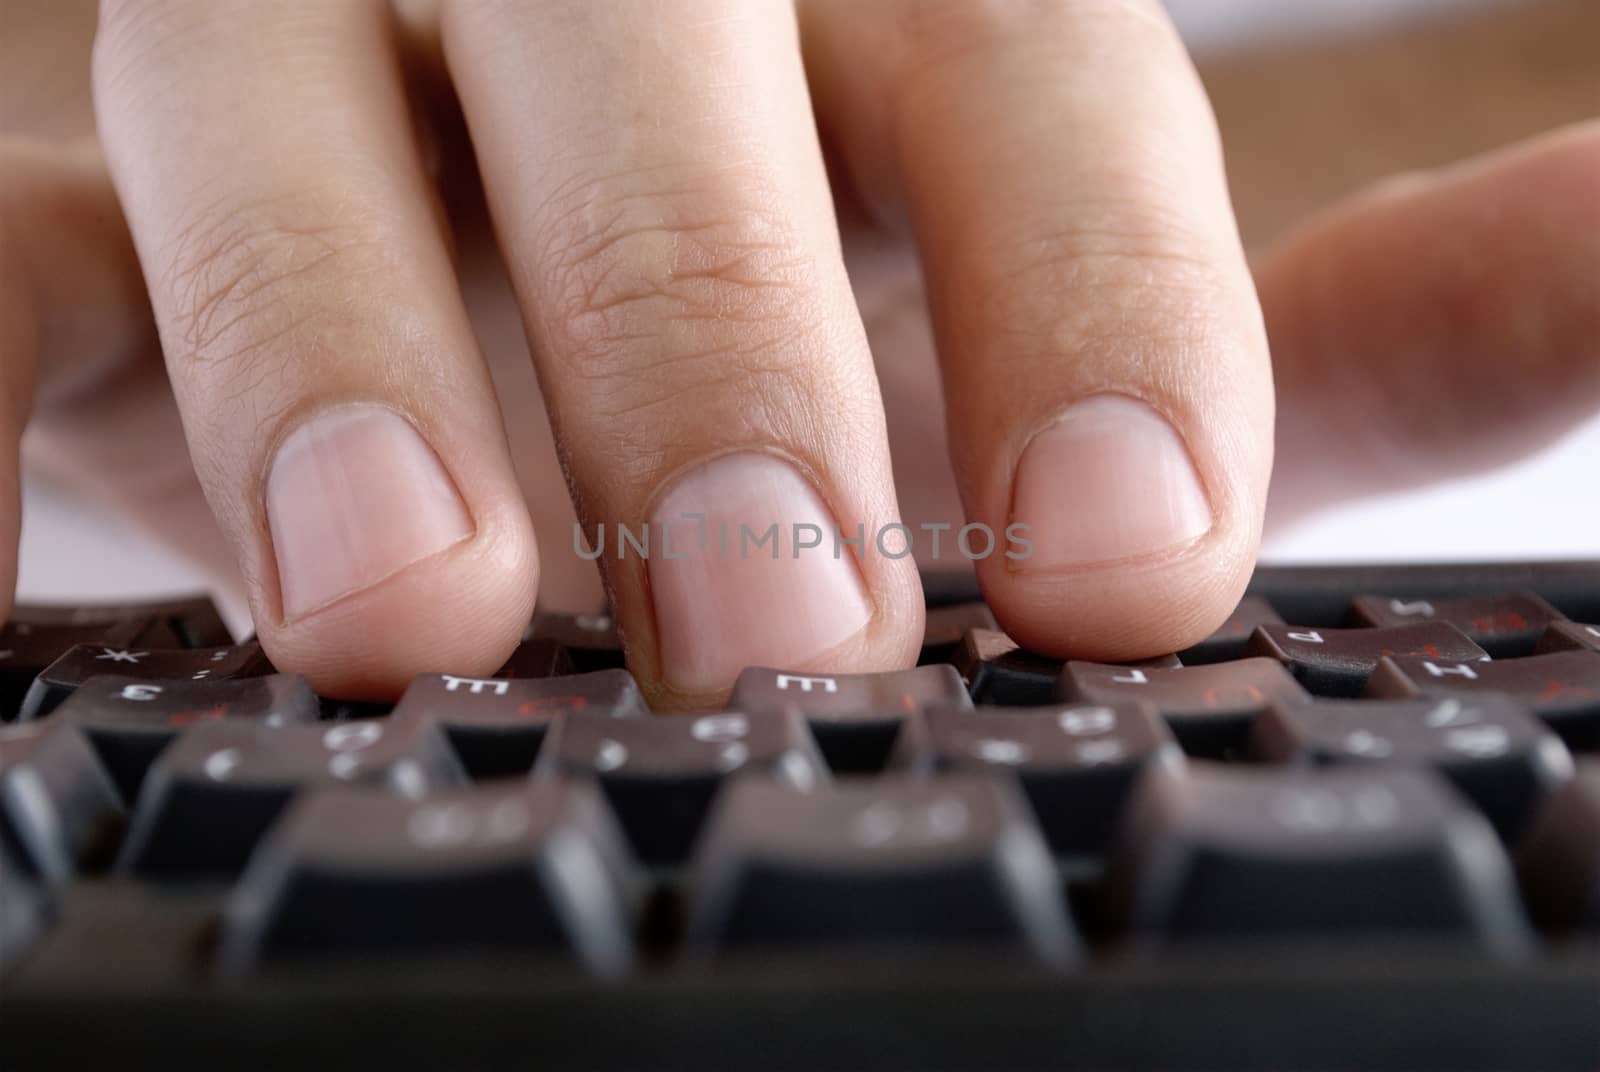 keyboard and hand by sergii_gnatiuk